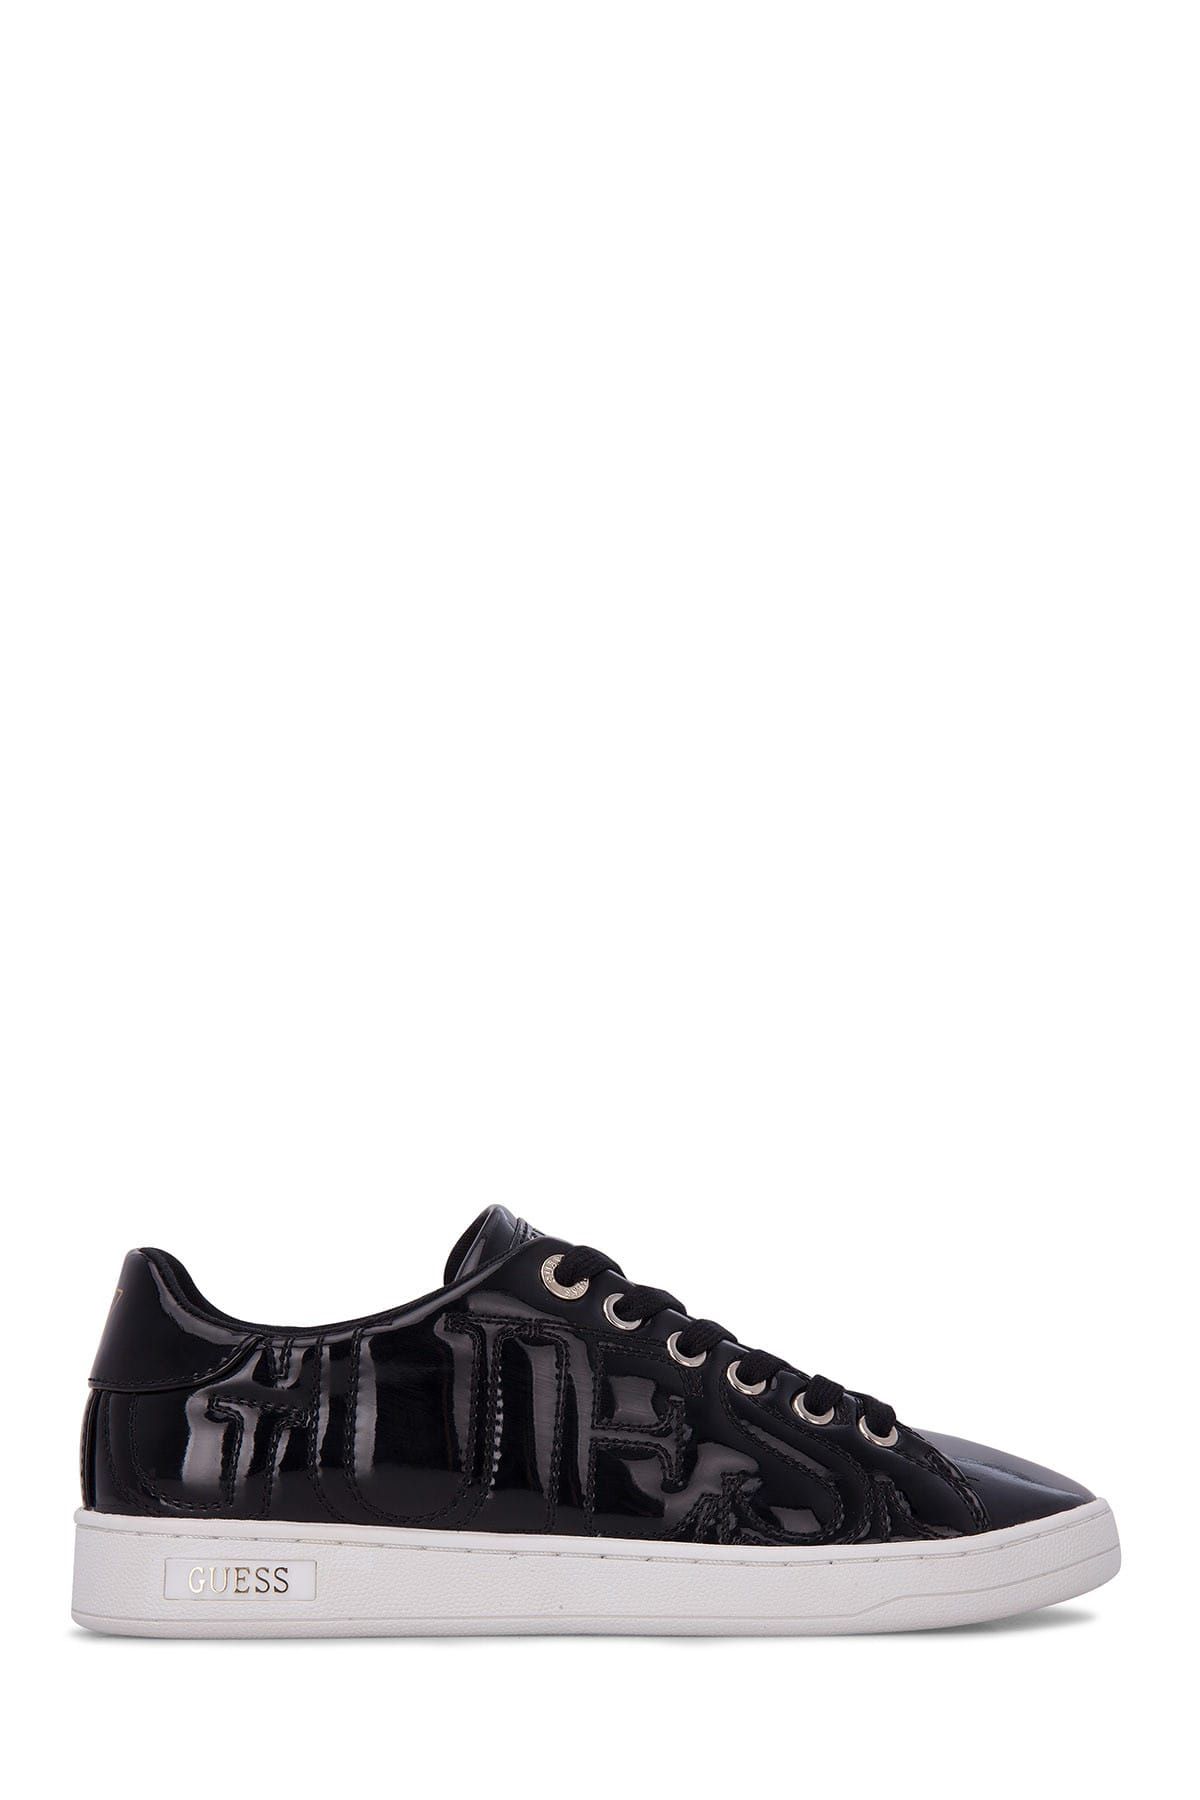 Guess Siyah Kadın Sneaker Flcen4Paf12 Black